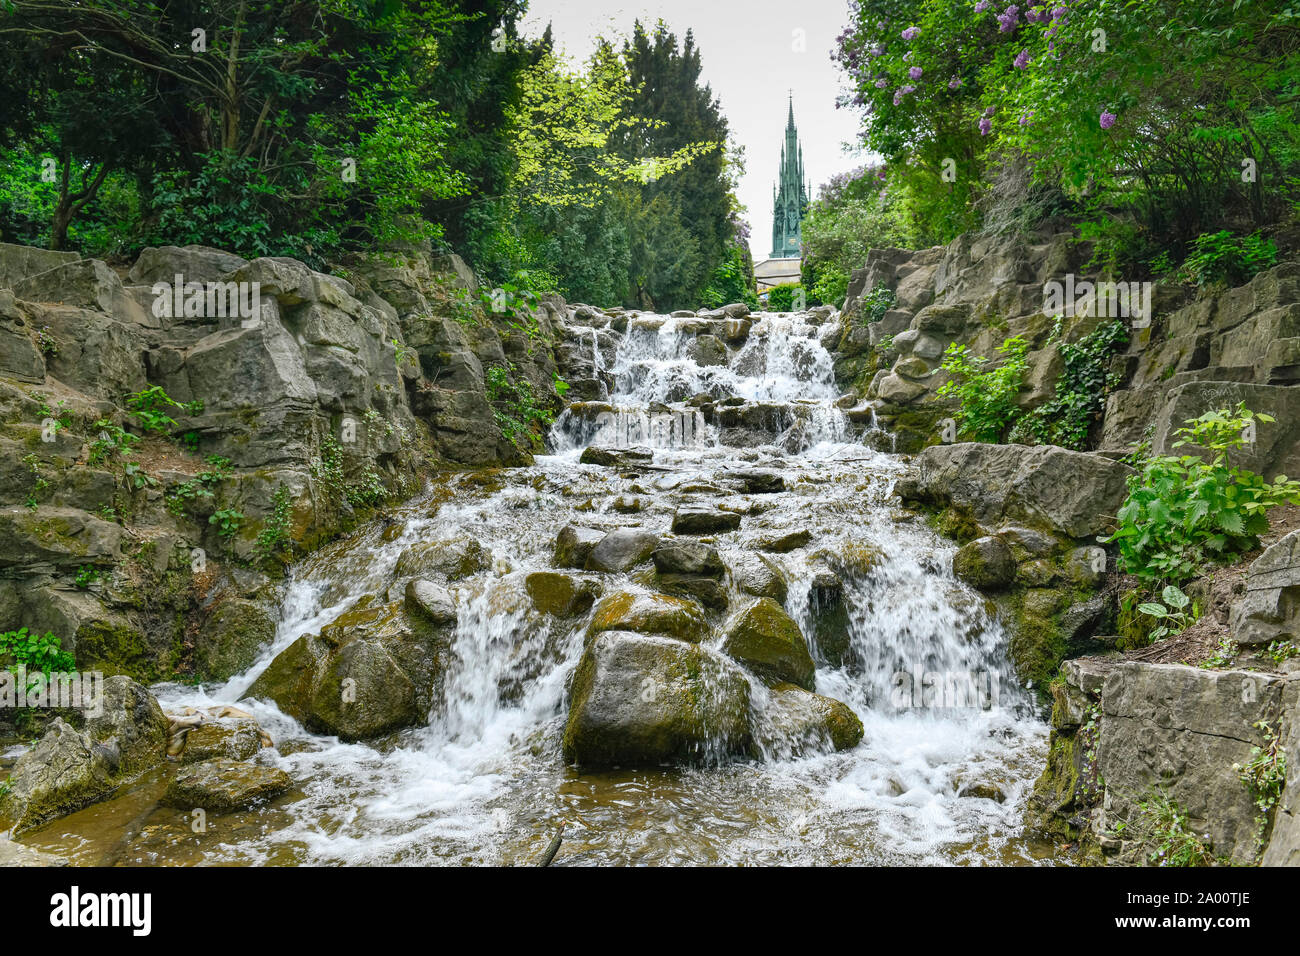 Wasserfall, Viktoriapark, Kreuzberg, Berlin, Deutschland Stock Photo